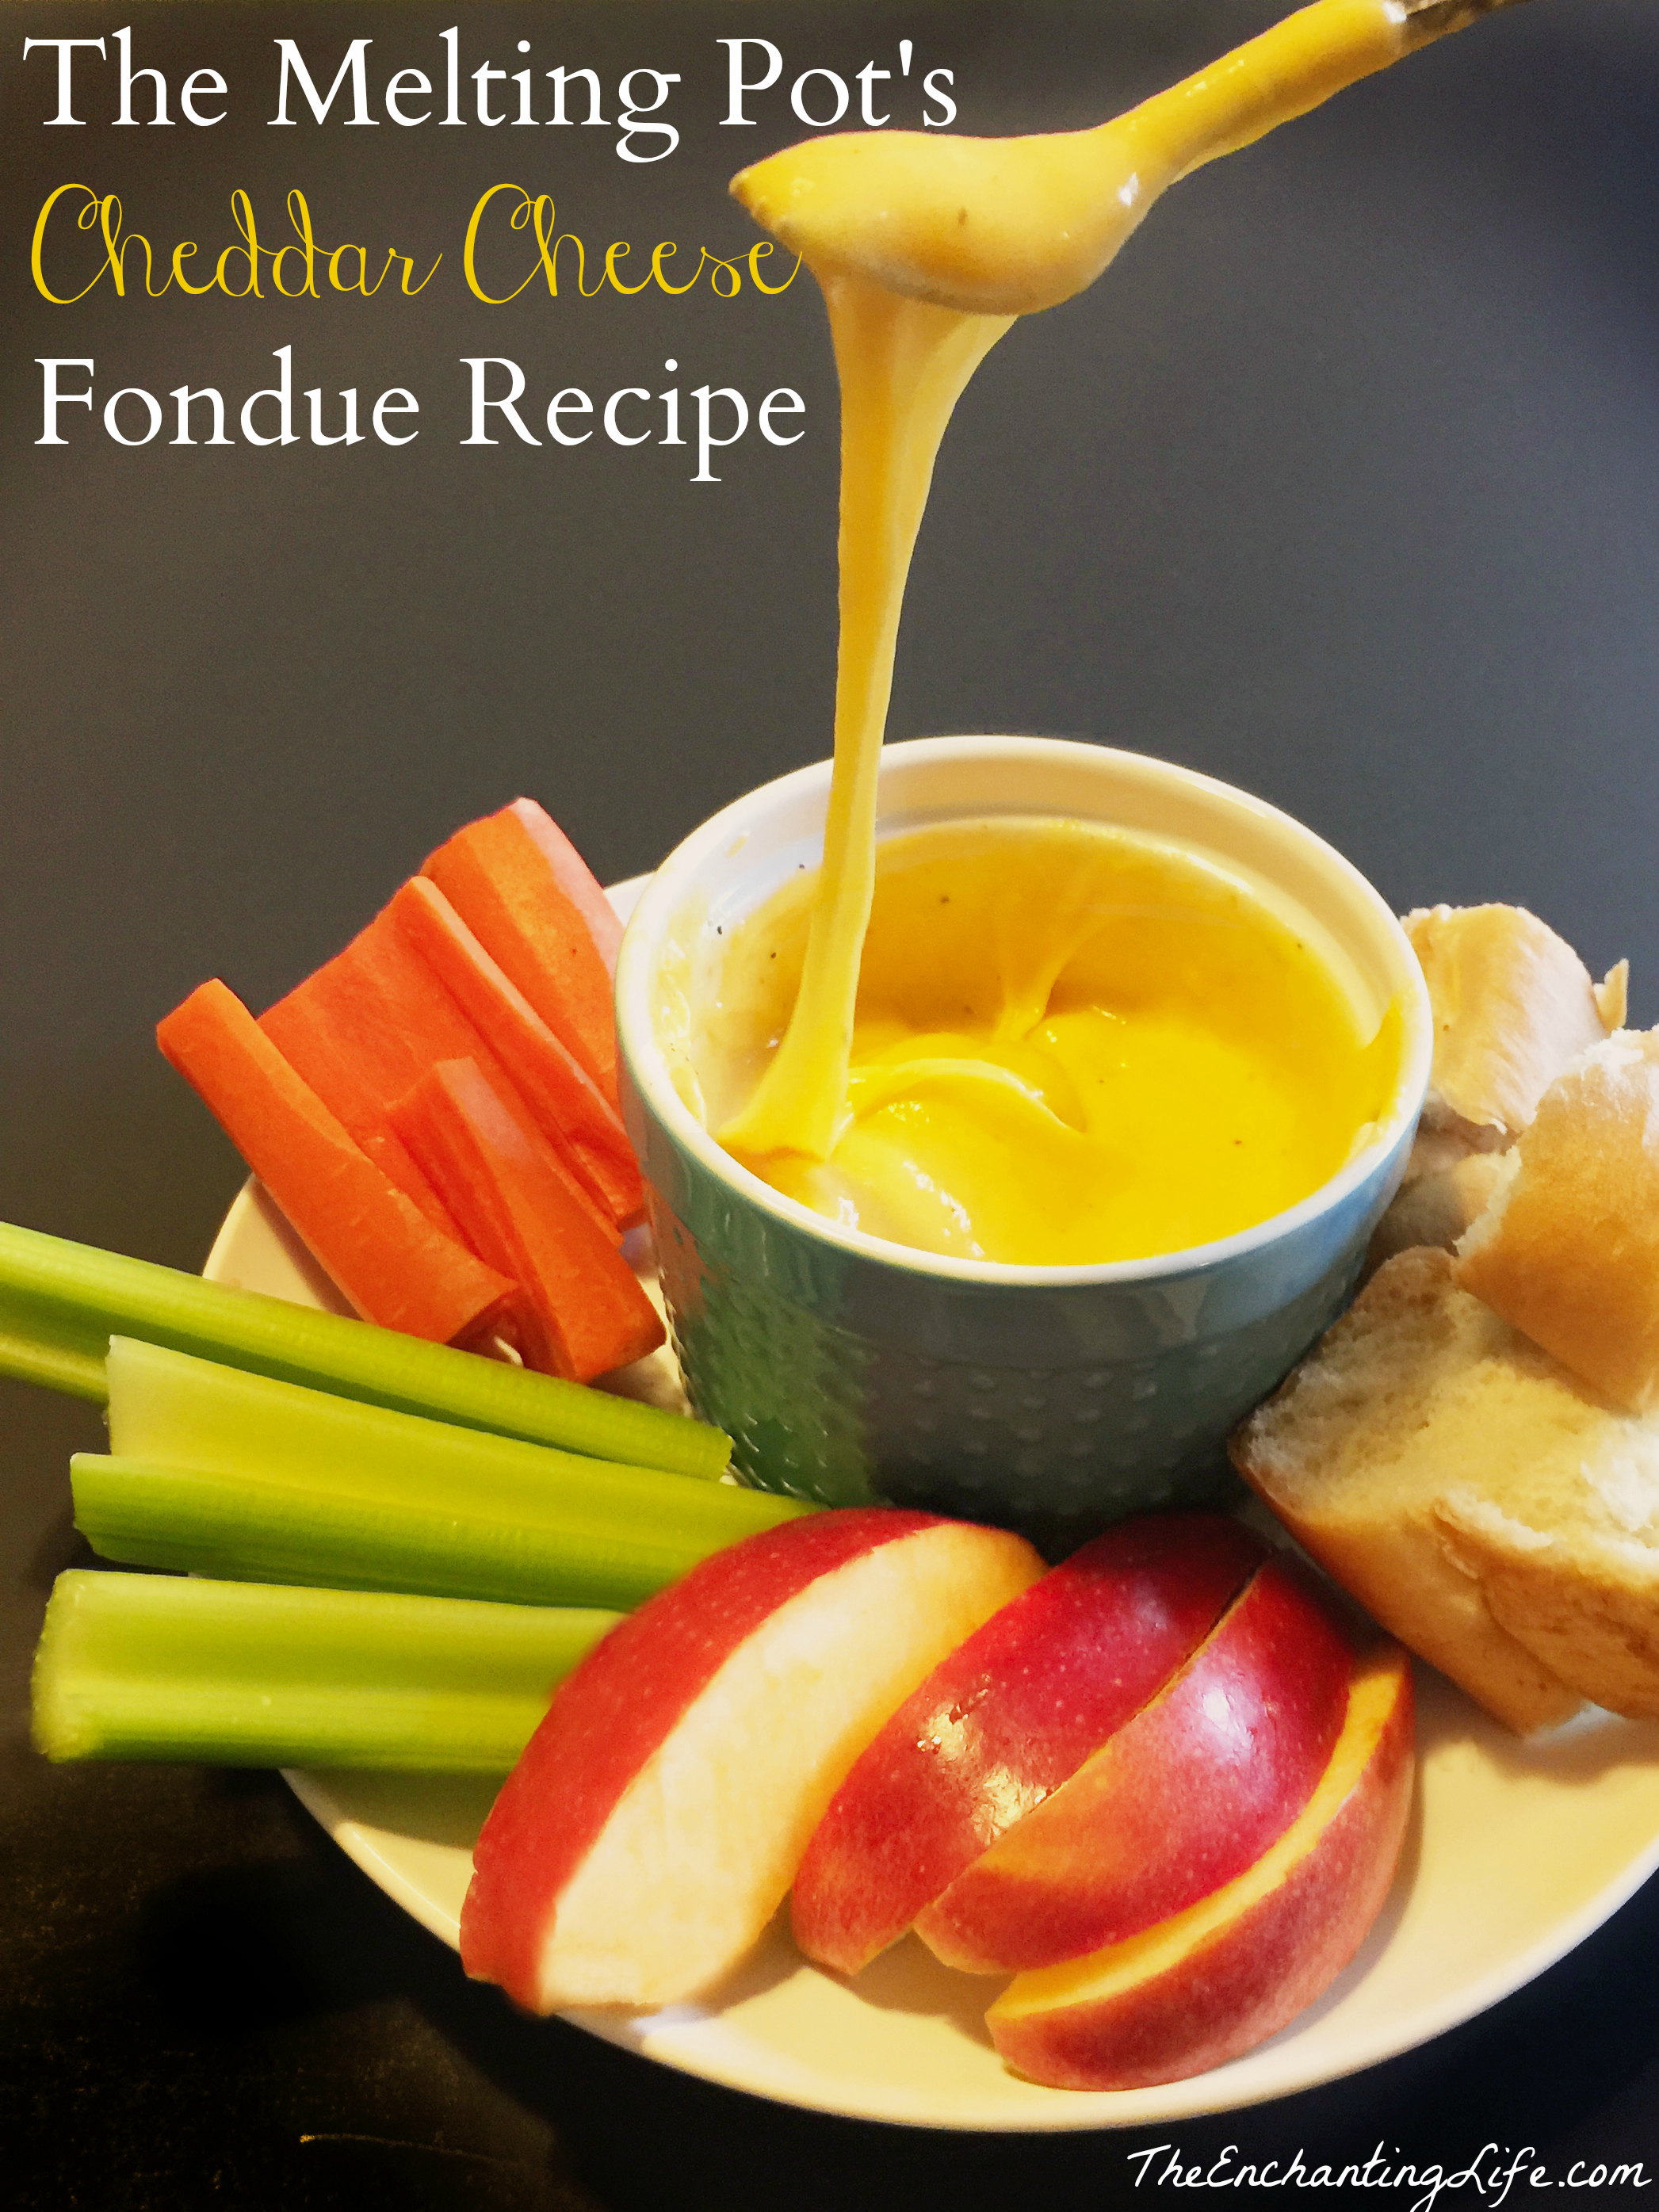 The Melting Pot's Cheddar Cheese Fondue Recipe